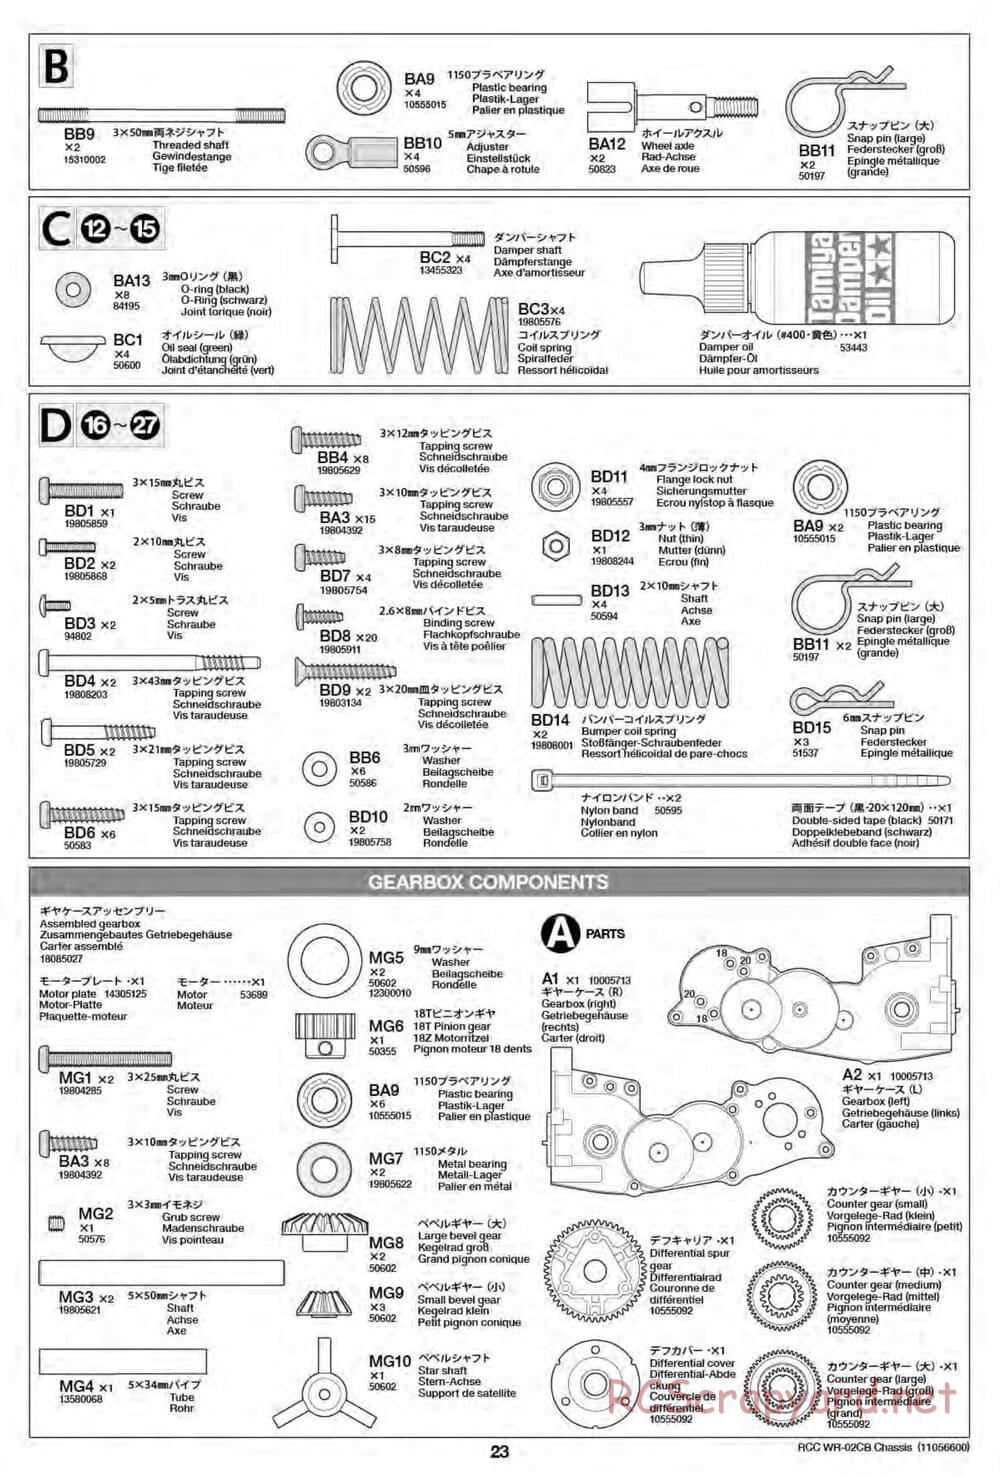 Tamiya - WR-02CB Chassis - Manual - Page 23